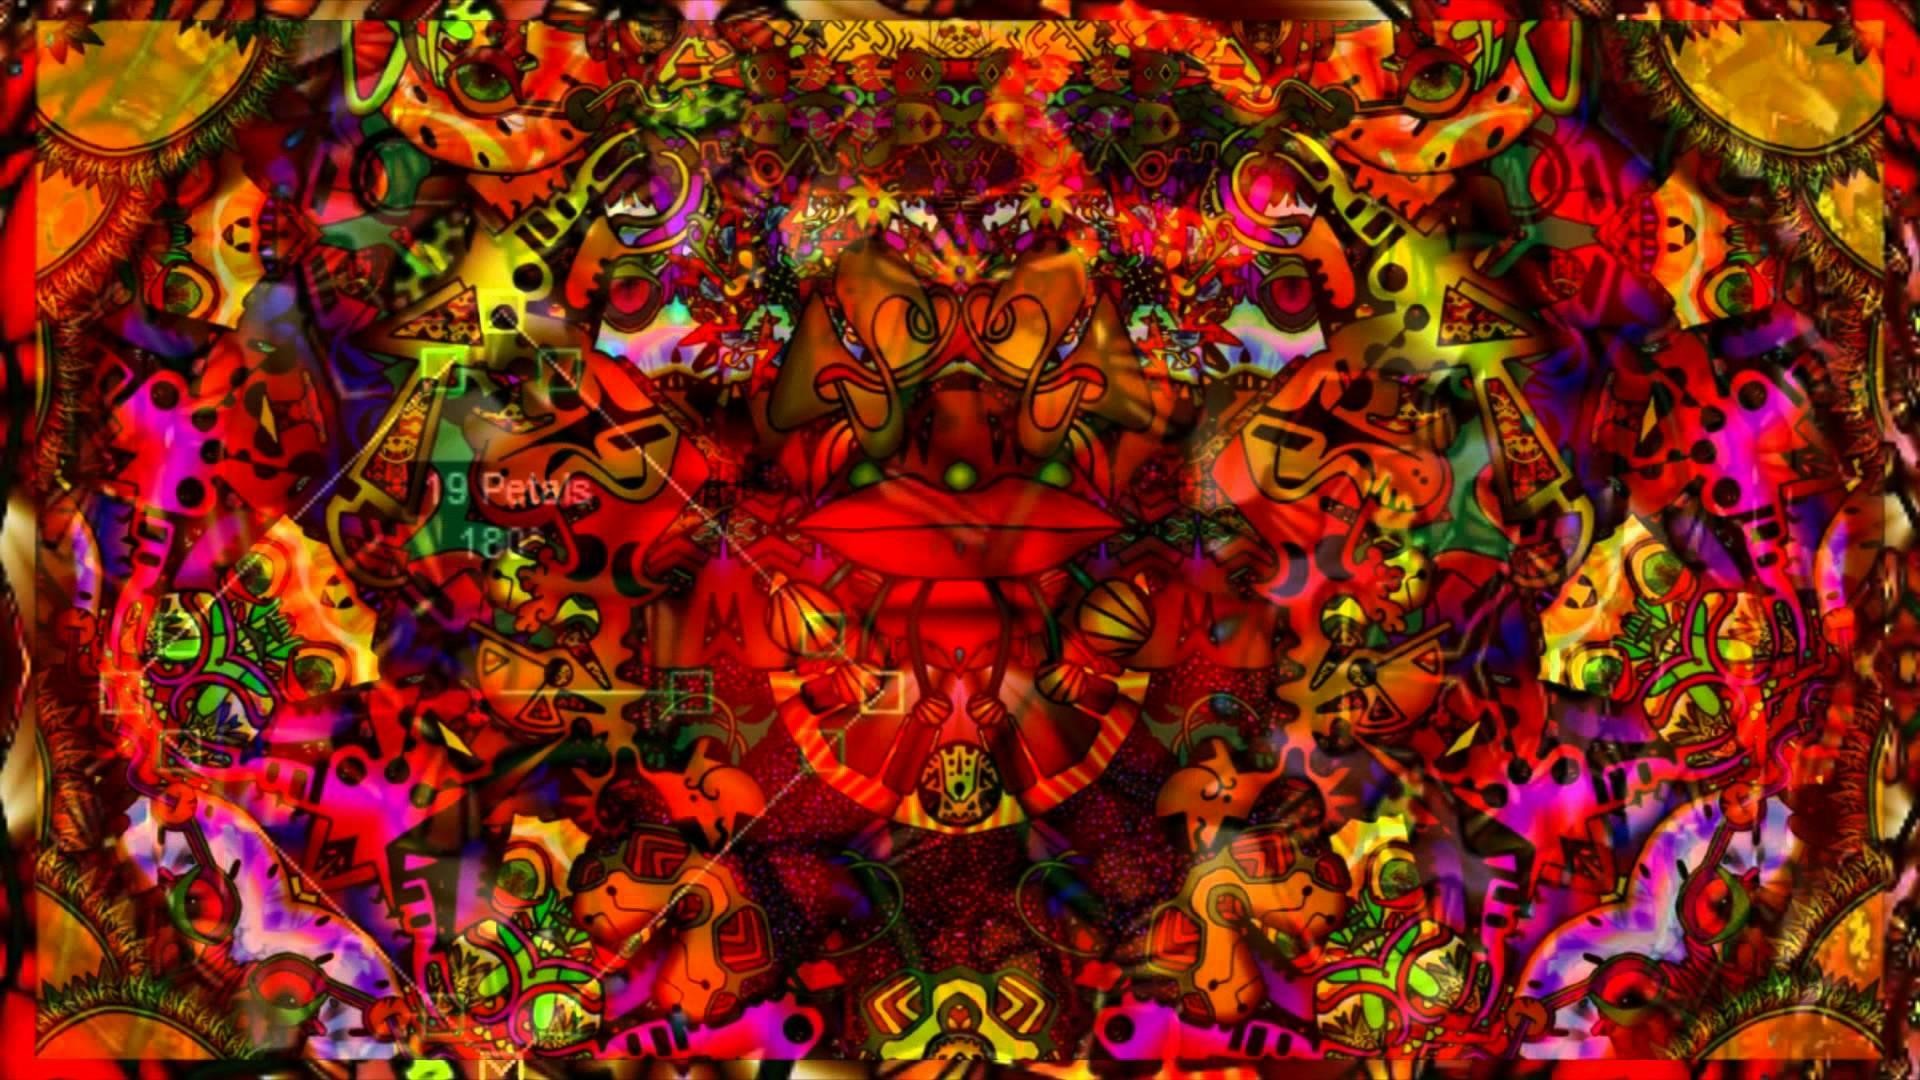 Wallpaper.wiki Image of Acid Trip Background PIC